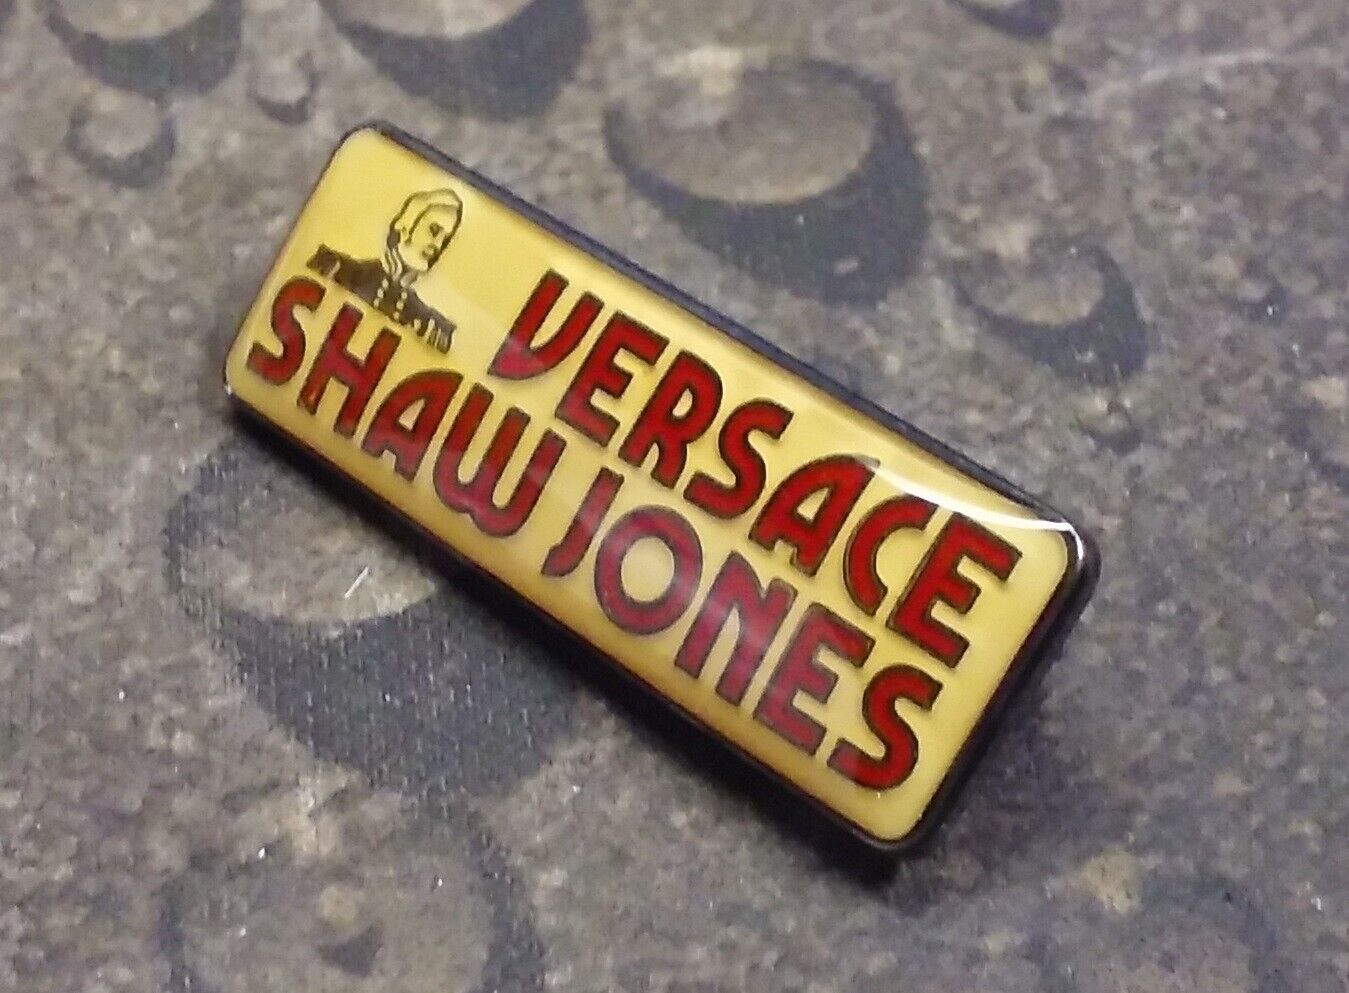 Versace Shaw Jones vintage pin badge Precision Badges Sydney NSW Australia  